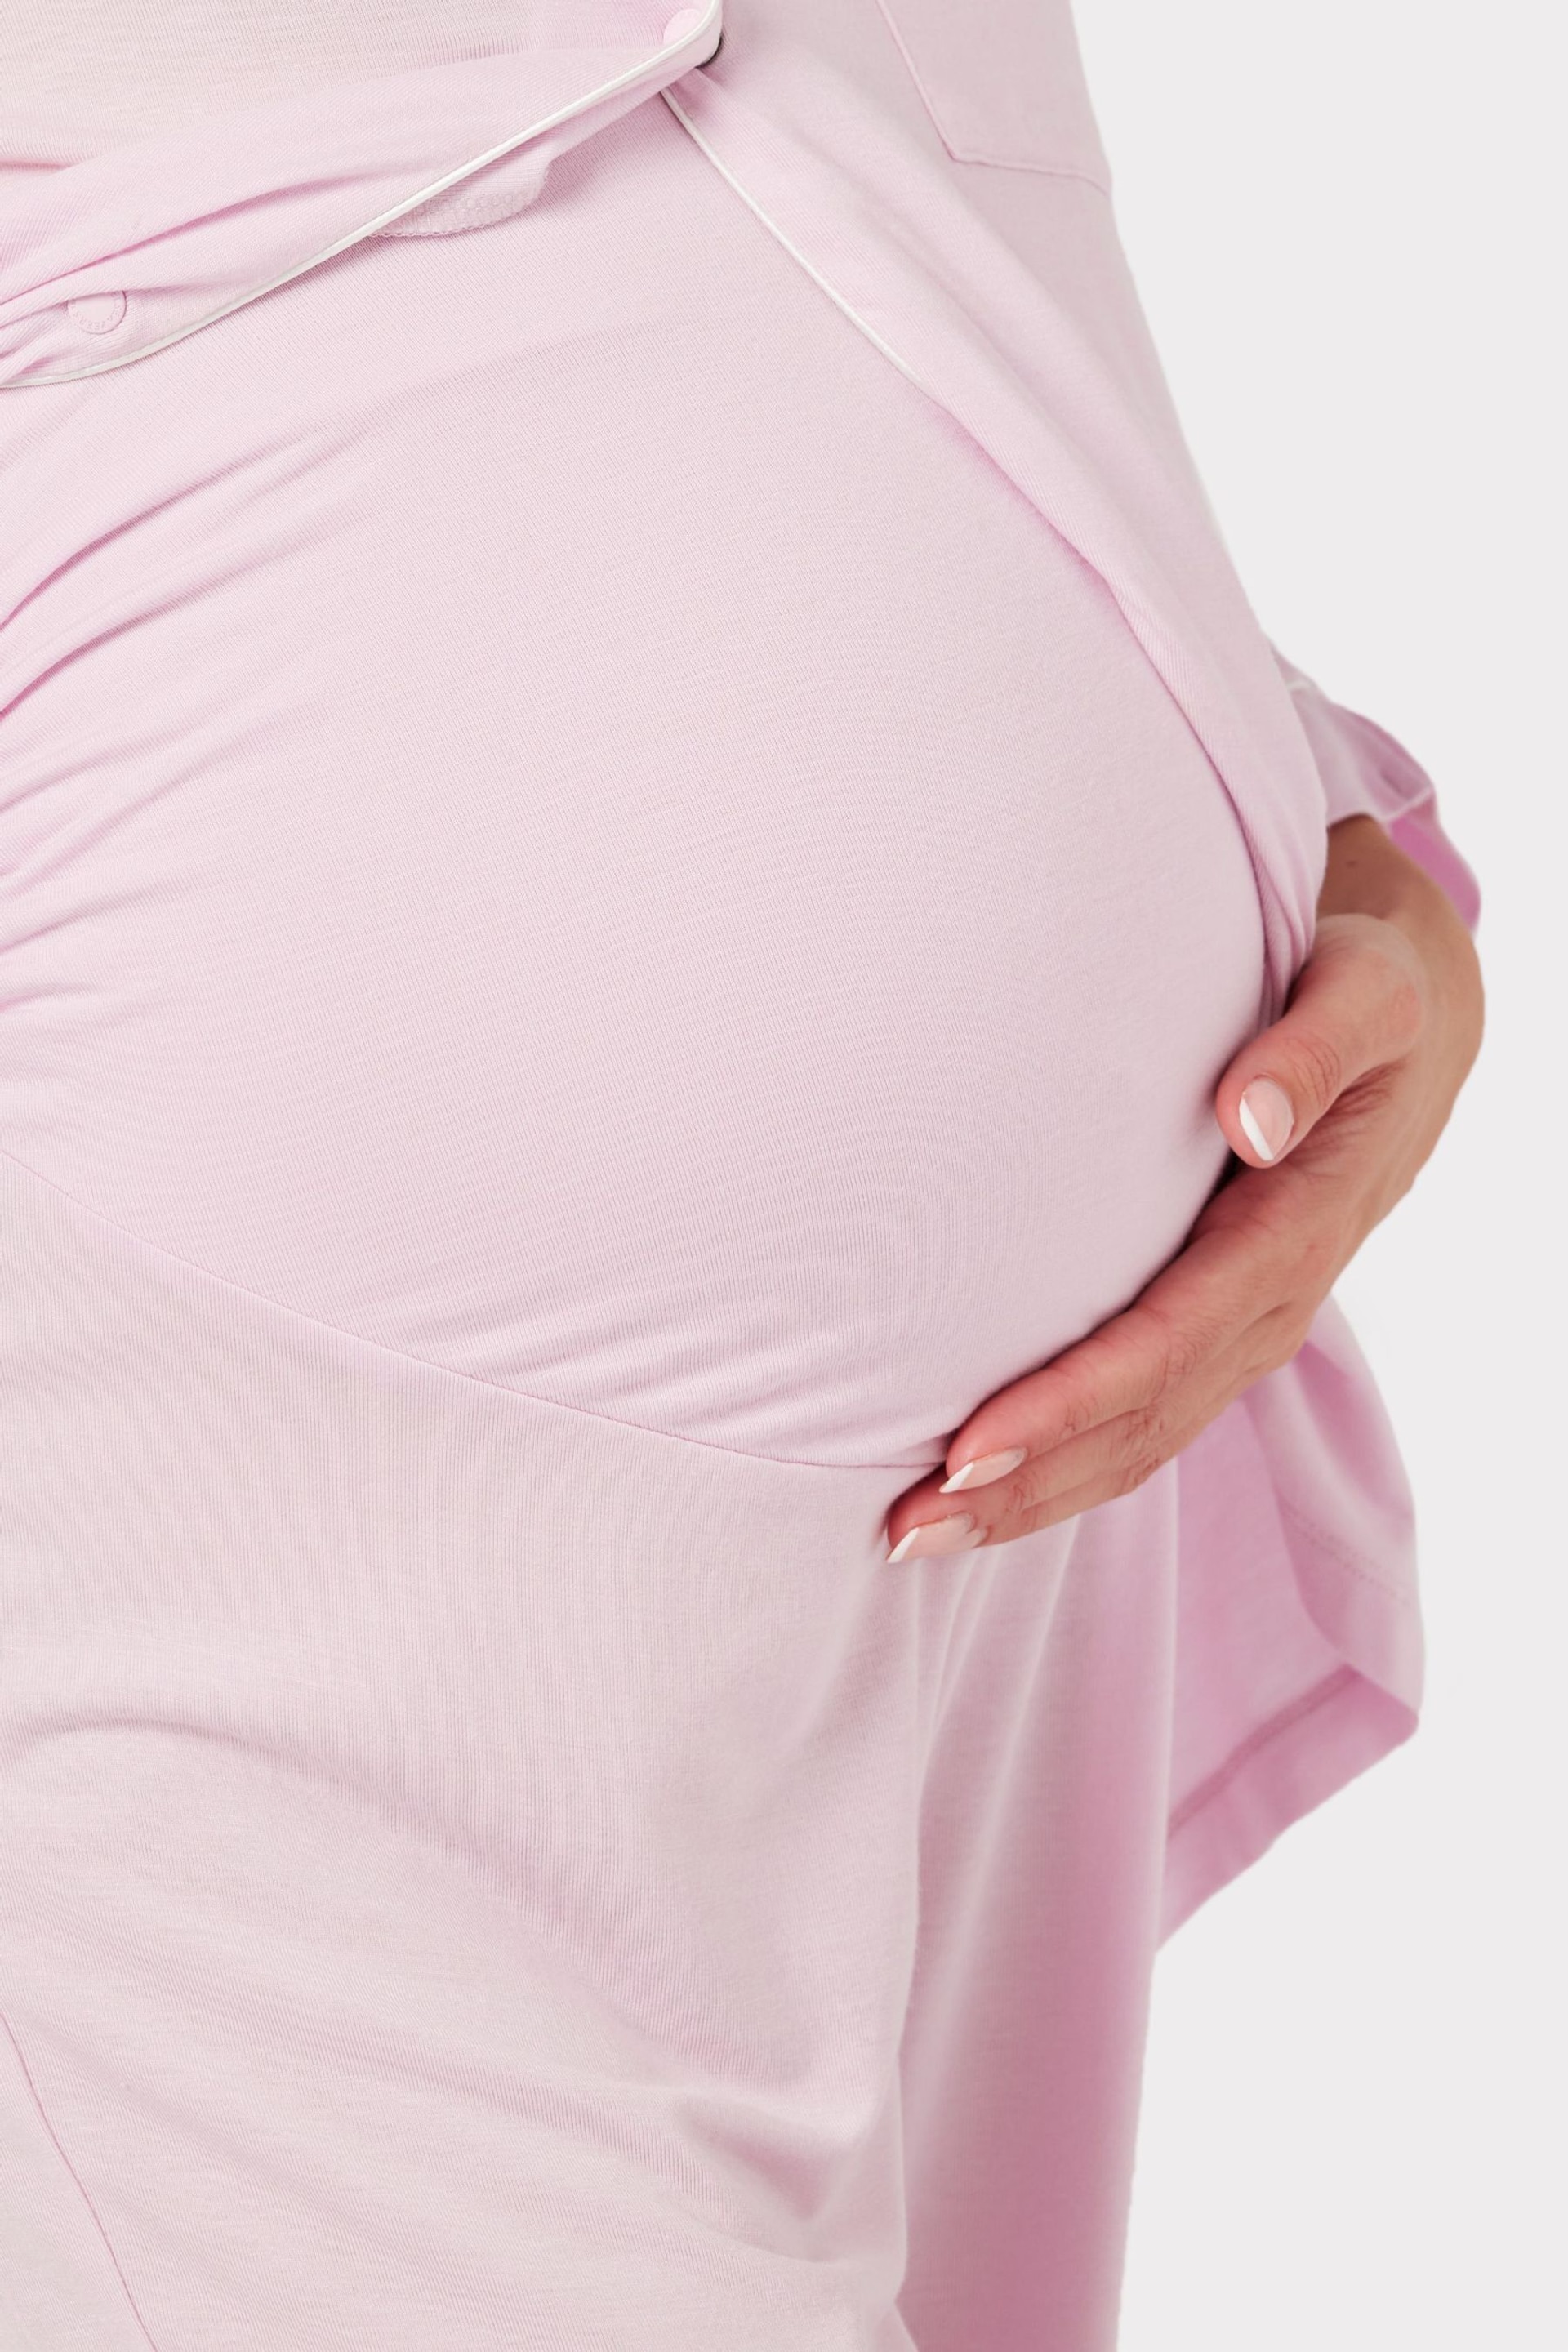 Chelsea Peers Pink Maternity Maternity Modal Button Up Long Pyjama Set - Image 2 of 5